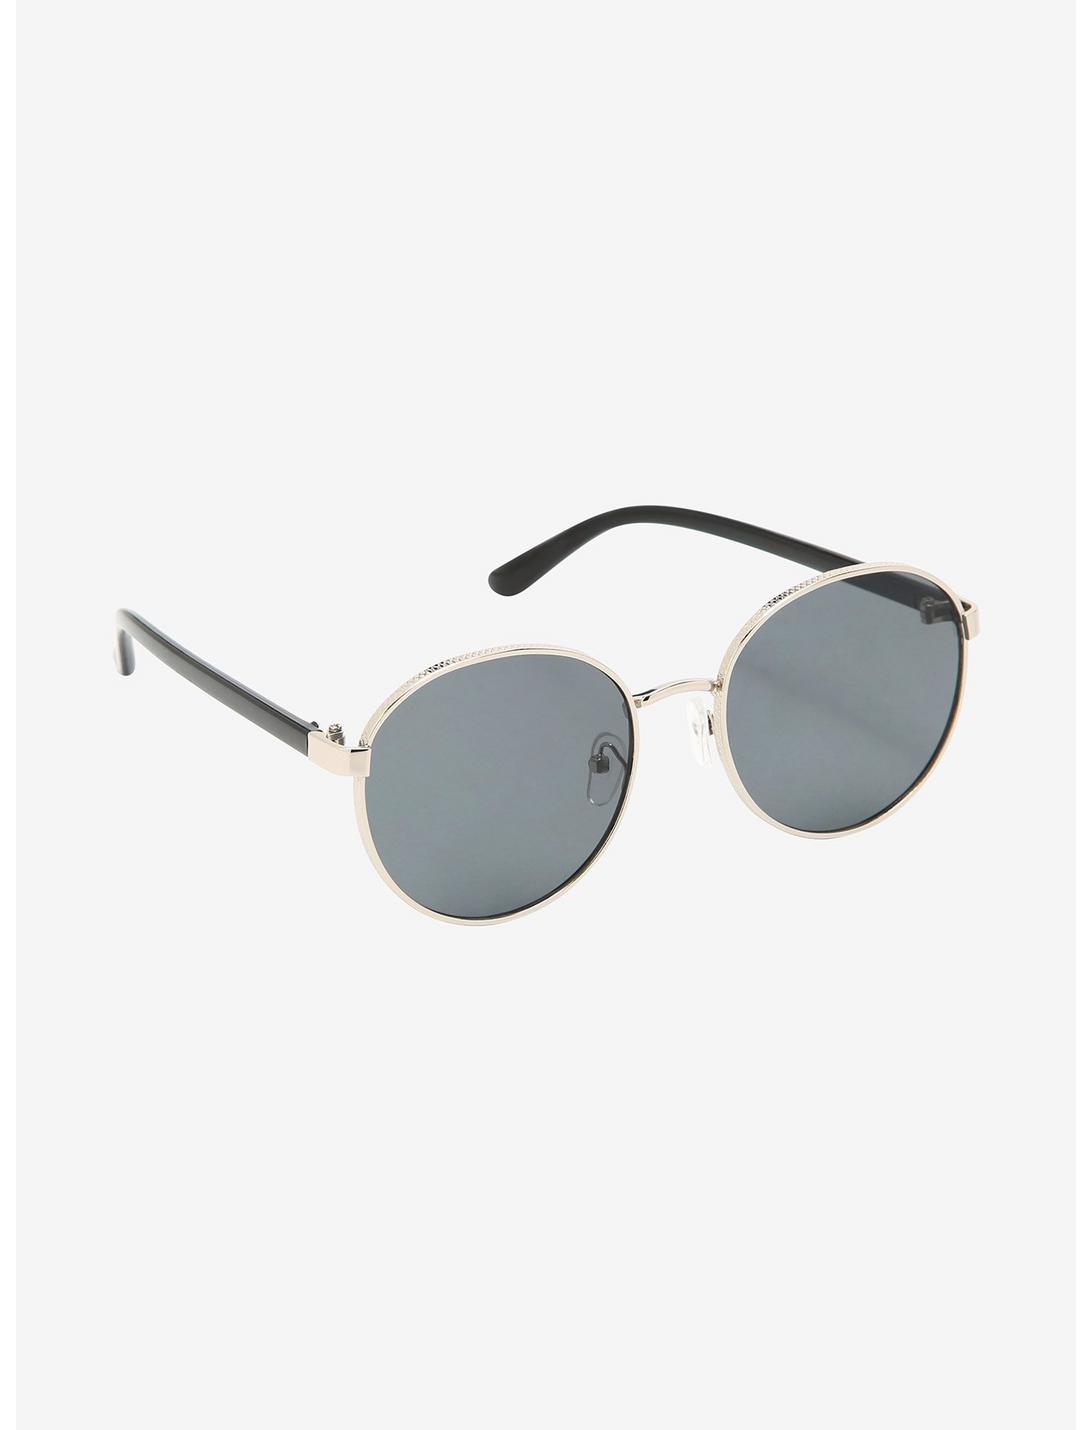 Silver Round Sunglasses, , hi-res